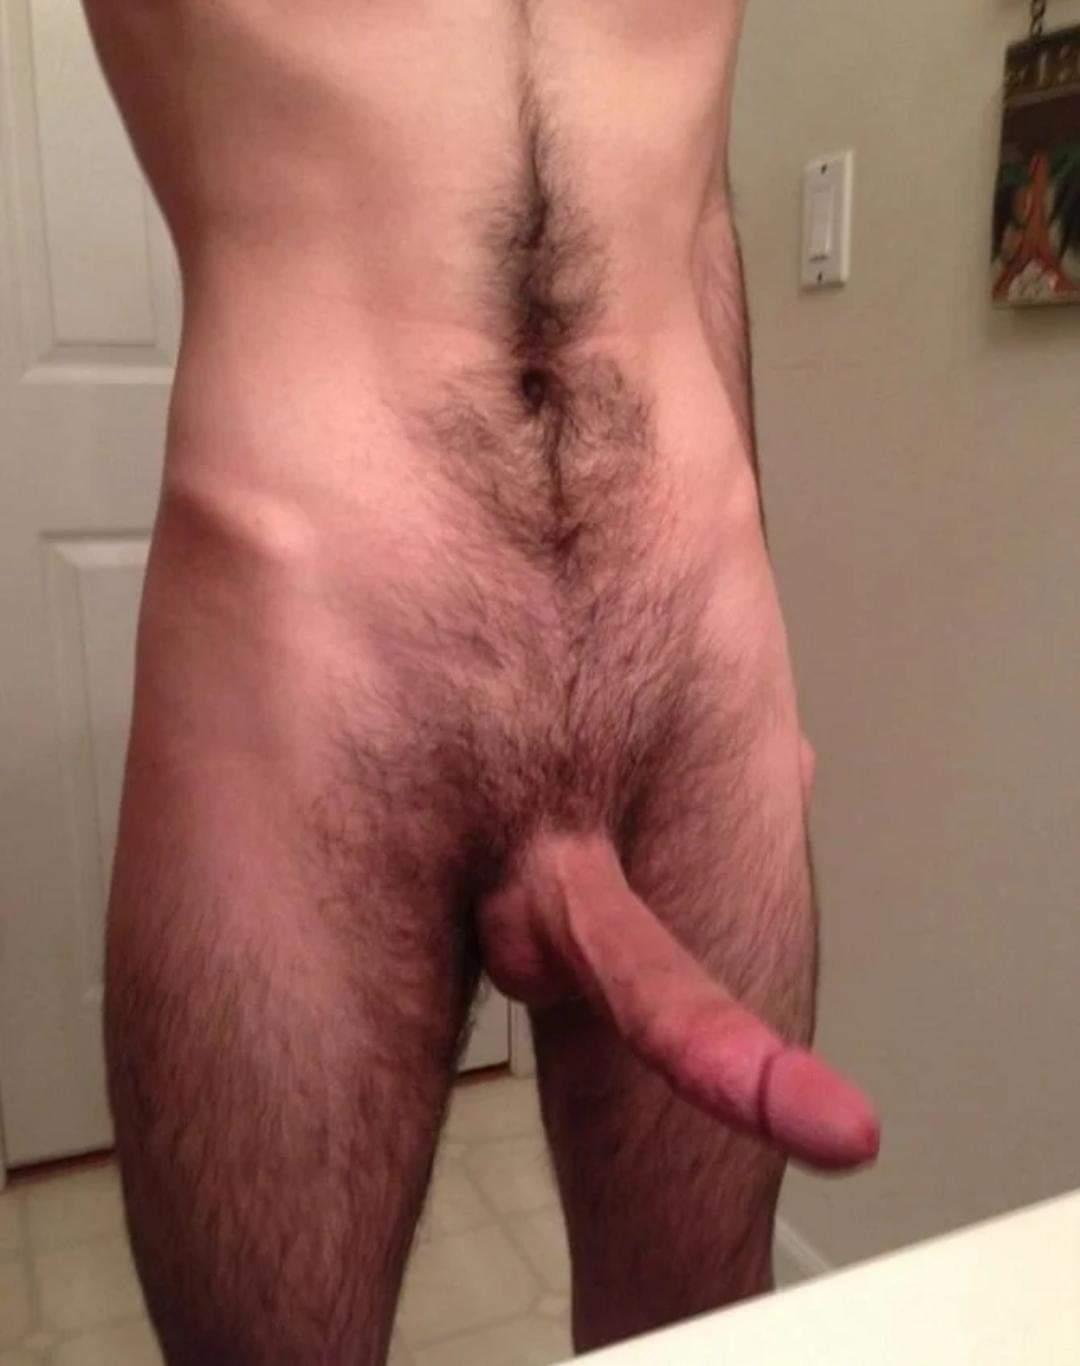 Long skinny dick nude